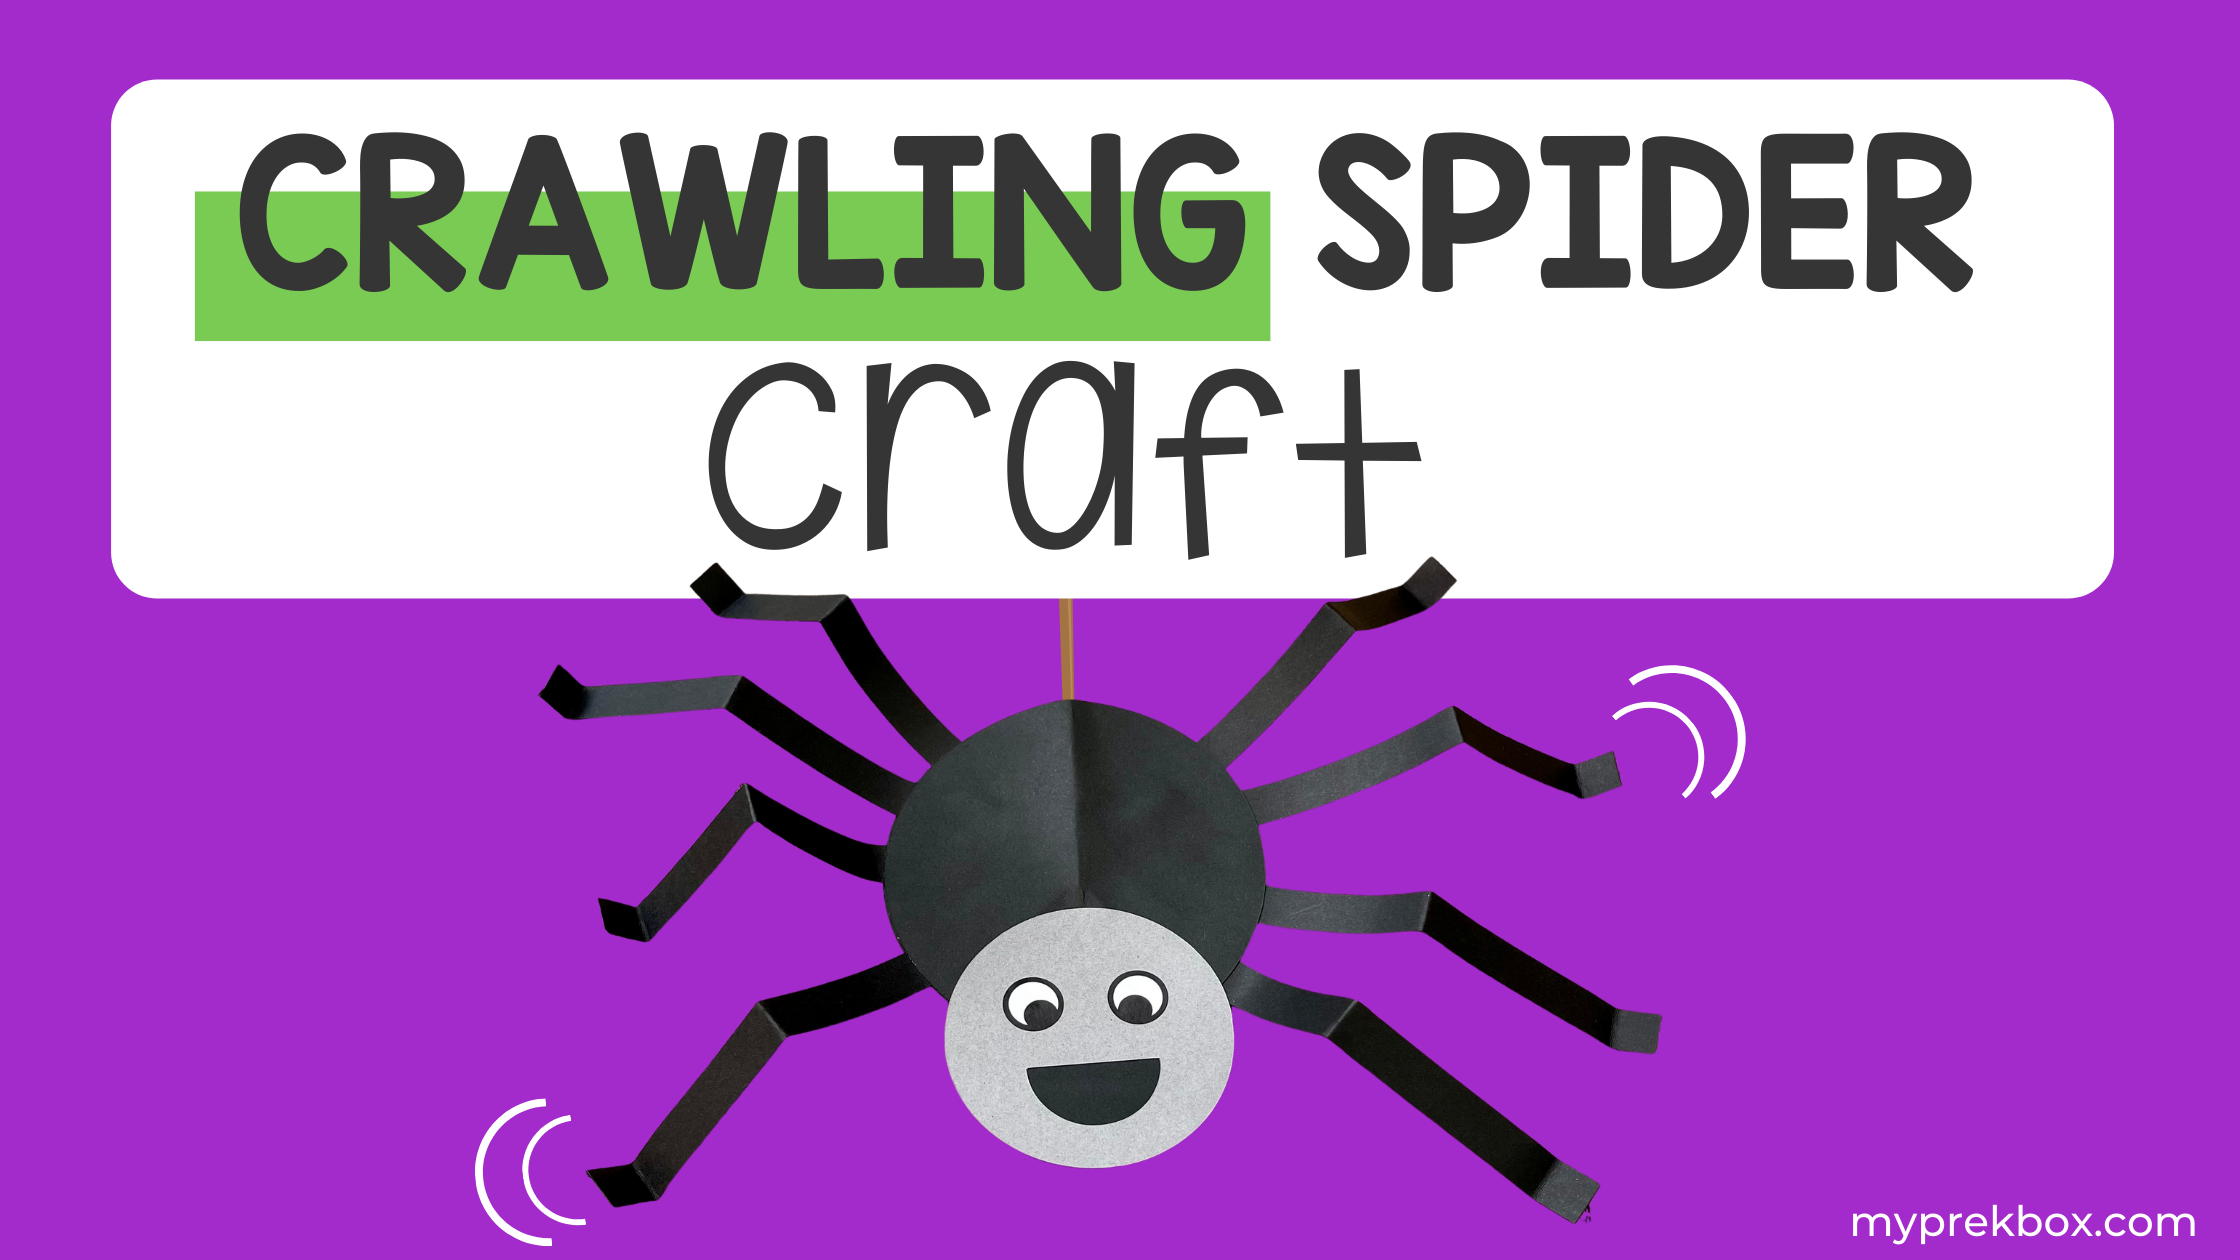 Crawling Spider Craft